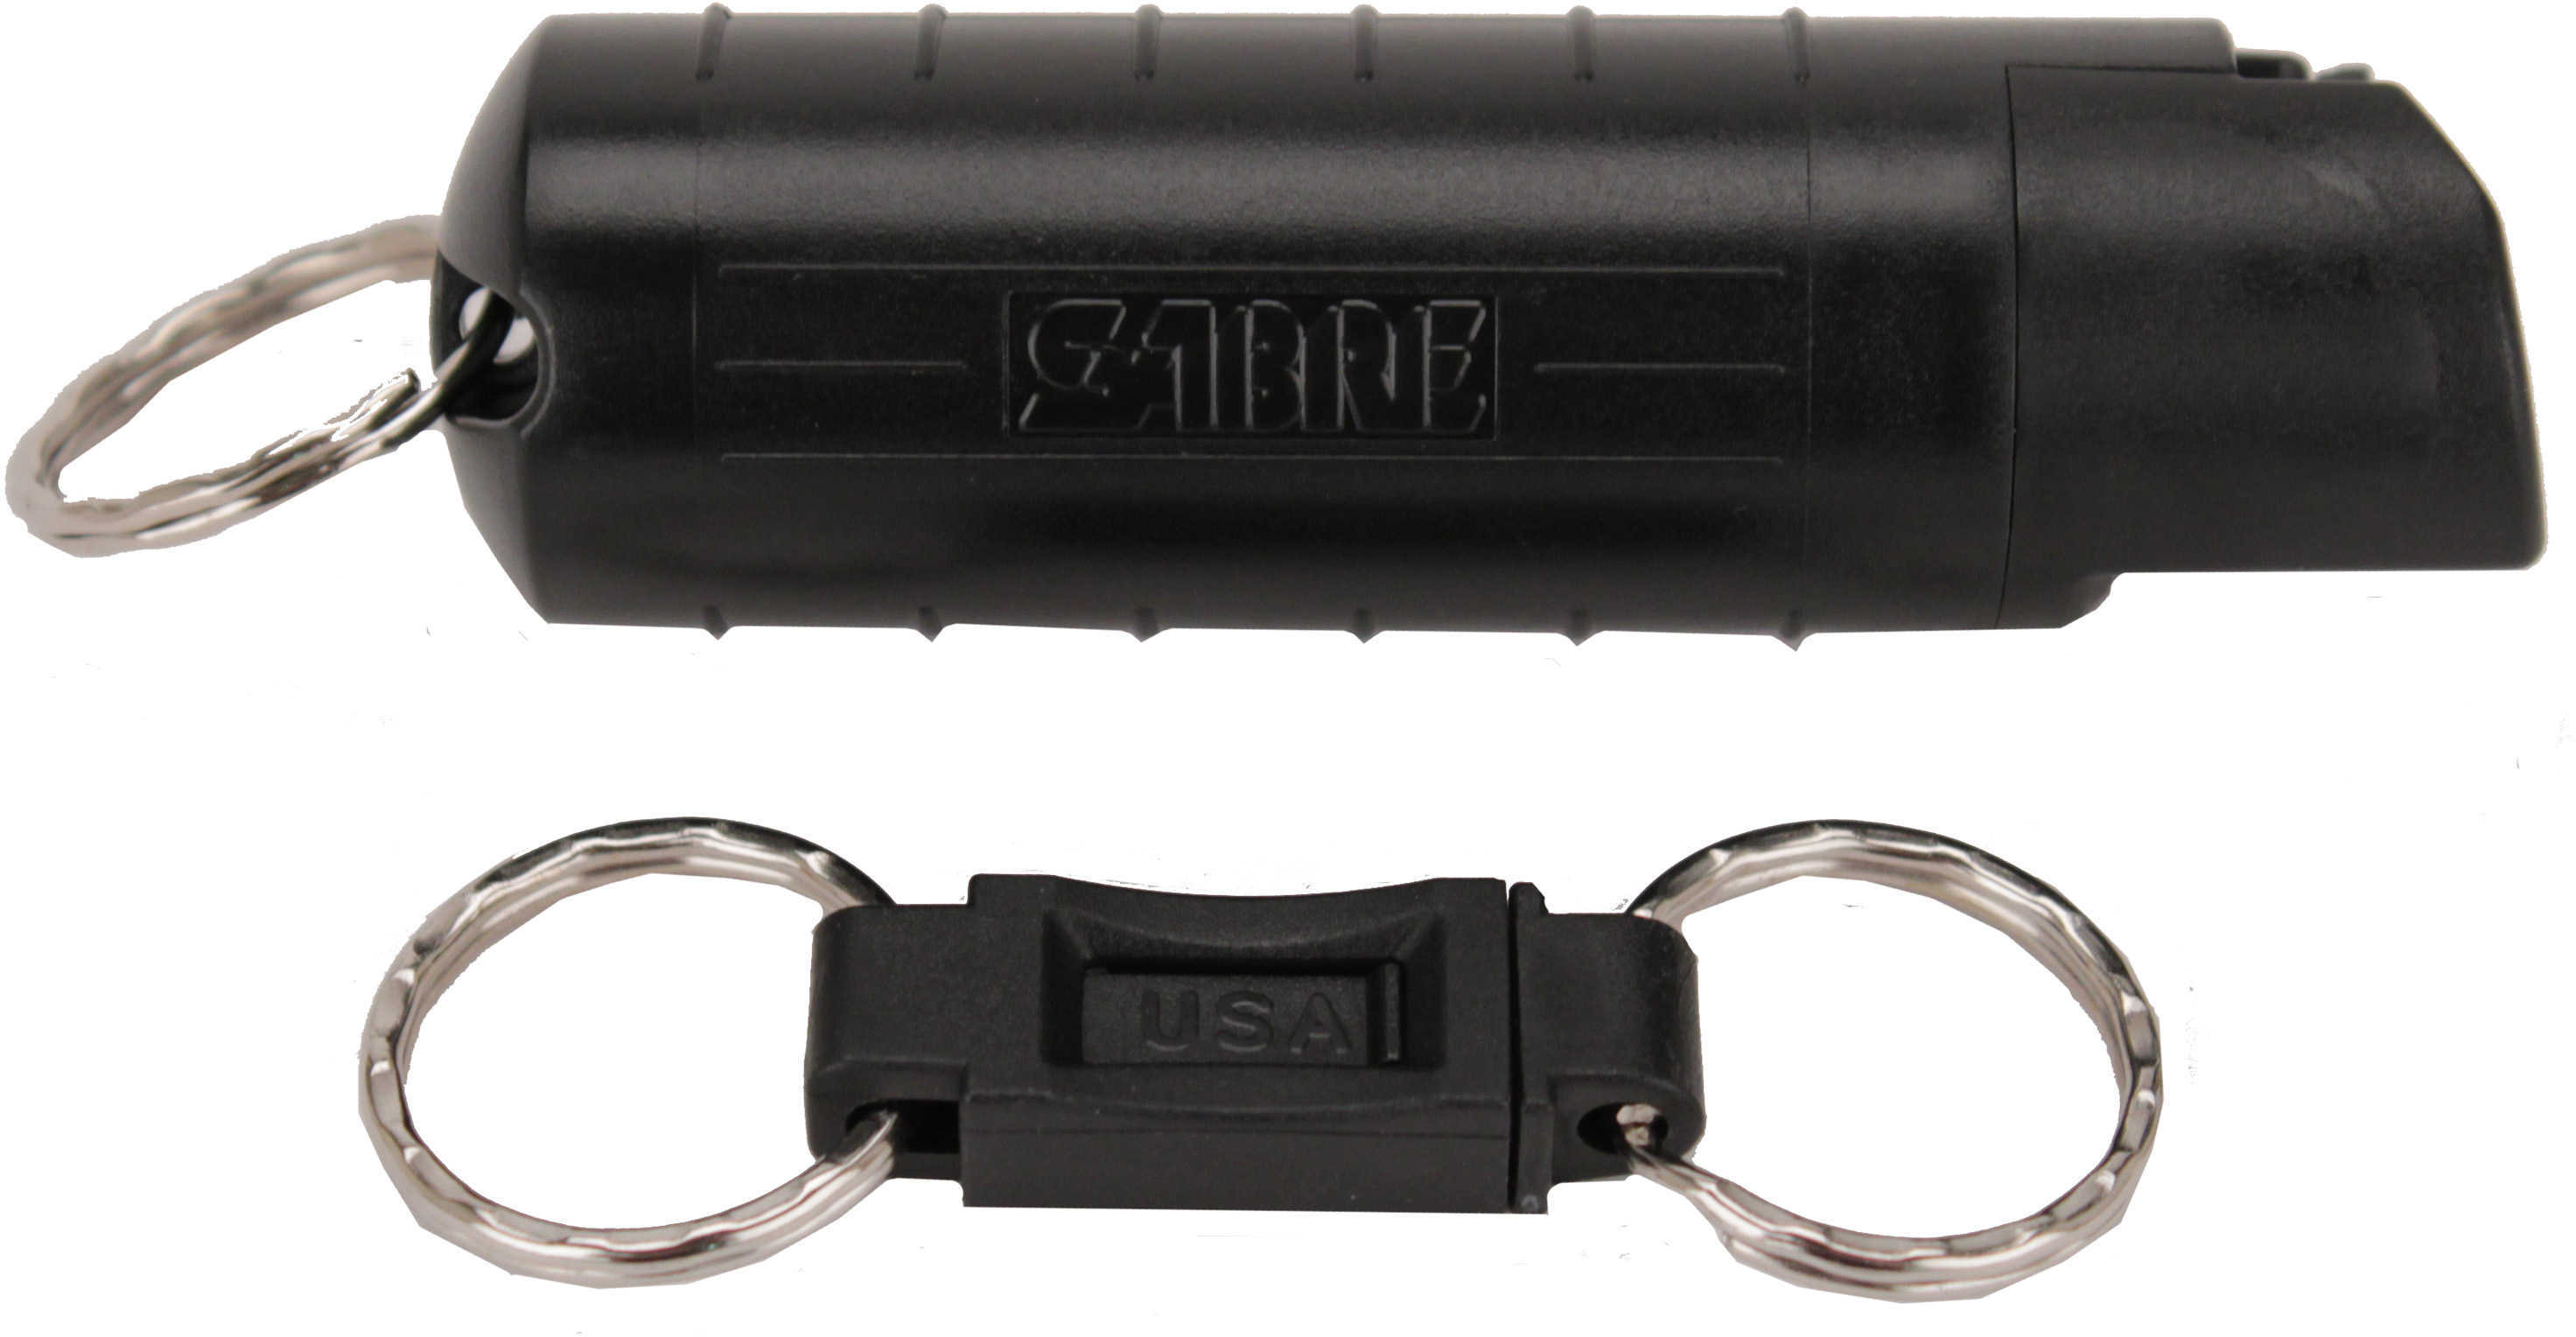 Security Equipment .5 Oz Pepper Spray With Hard Case/Belt Clip/25 Foot Range Md: HC14BKUS